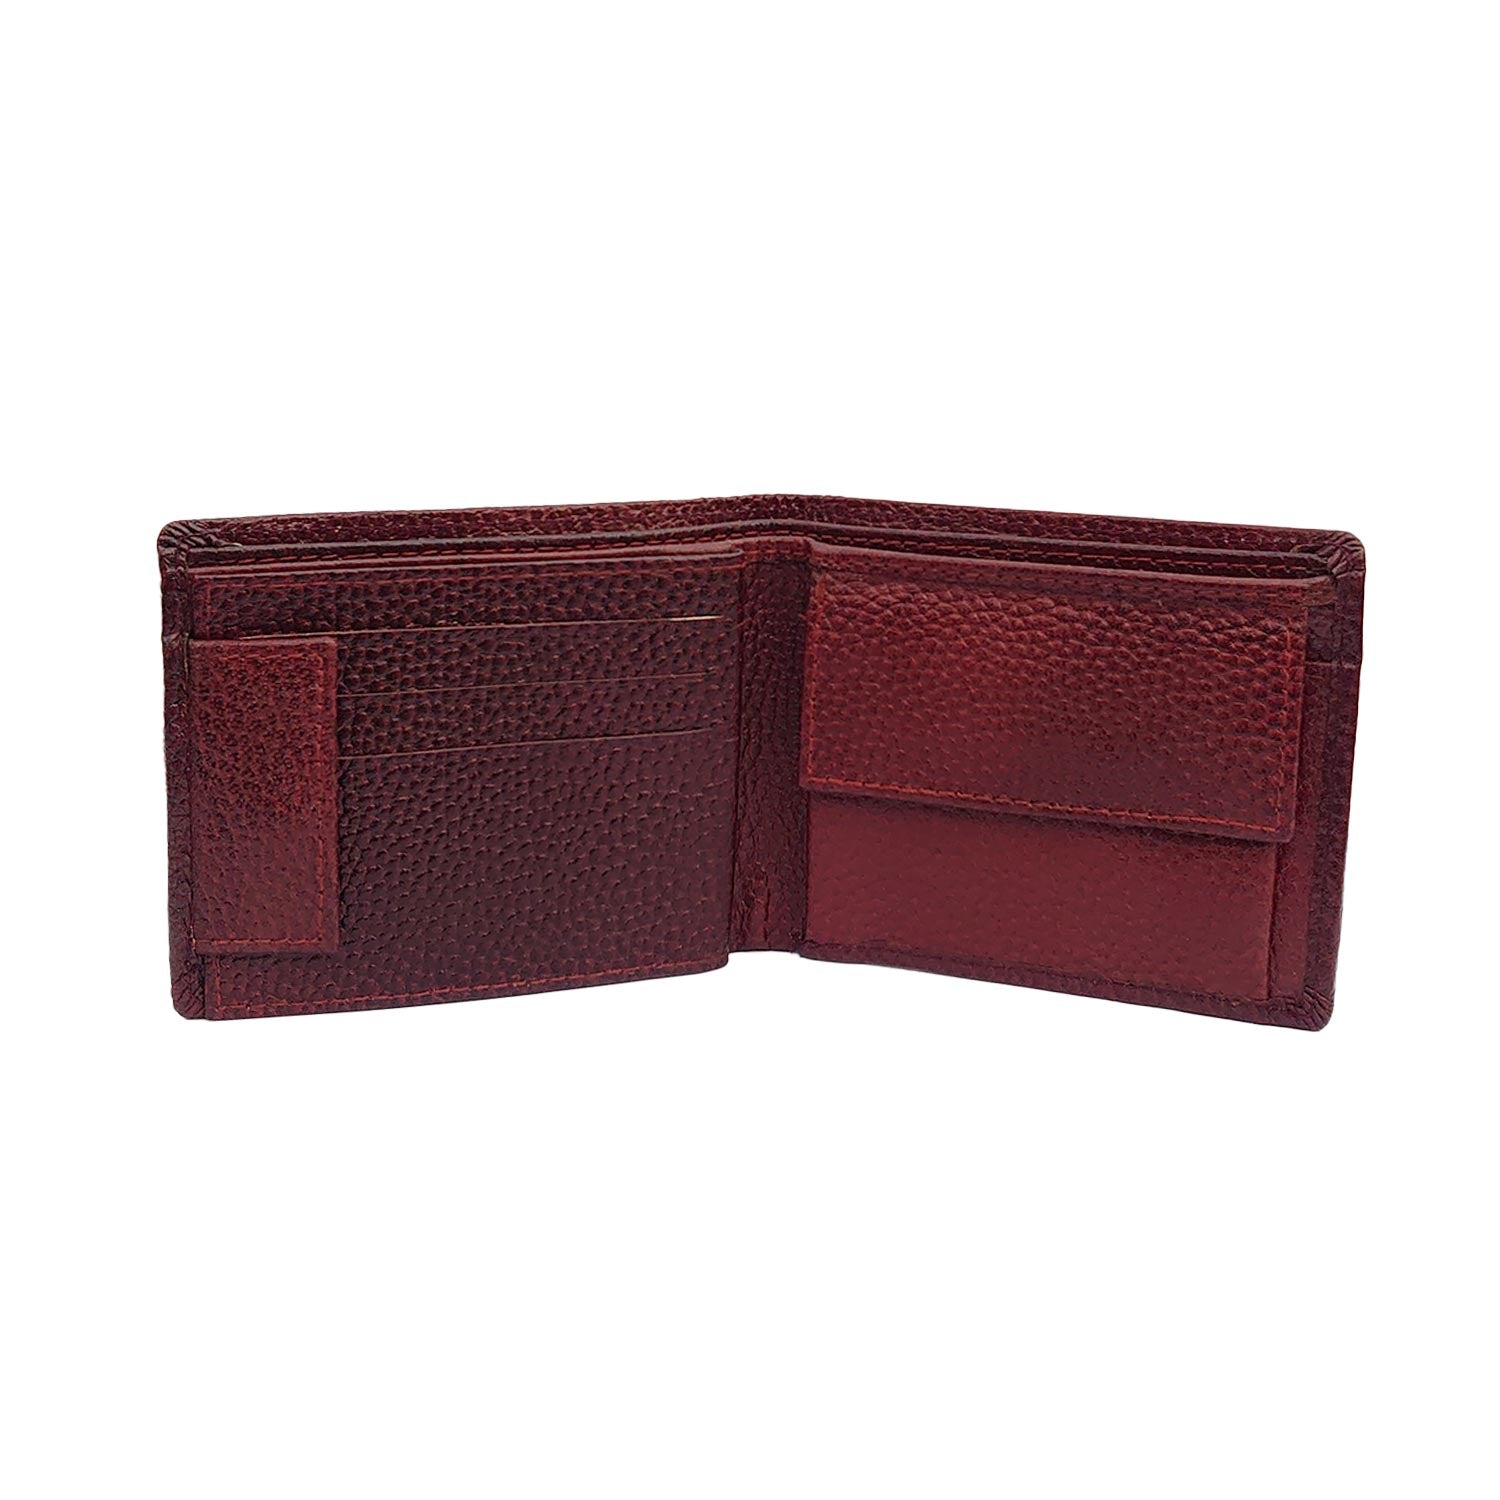 Azteca Leather Wallet